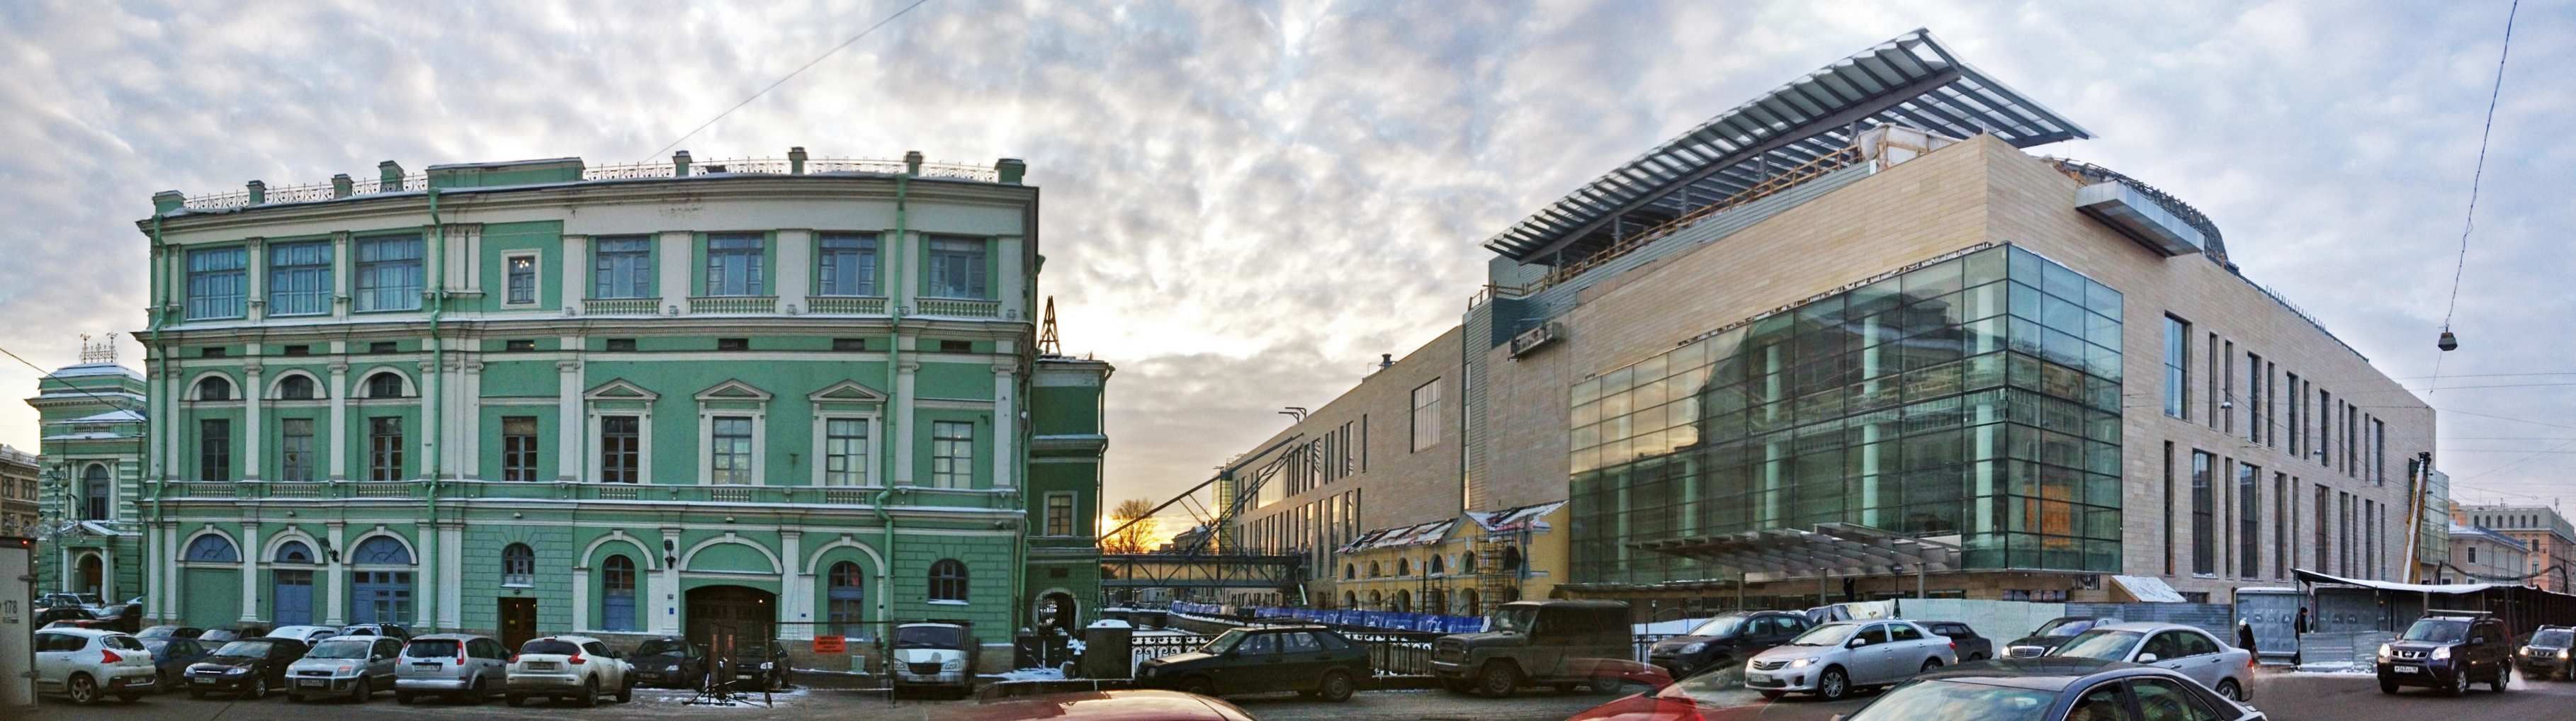 Panoramaansicht des historischen Mariinsky Theaters und des Neubaus Mariinsky II |  © Diamond Schmitt Architects